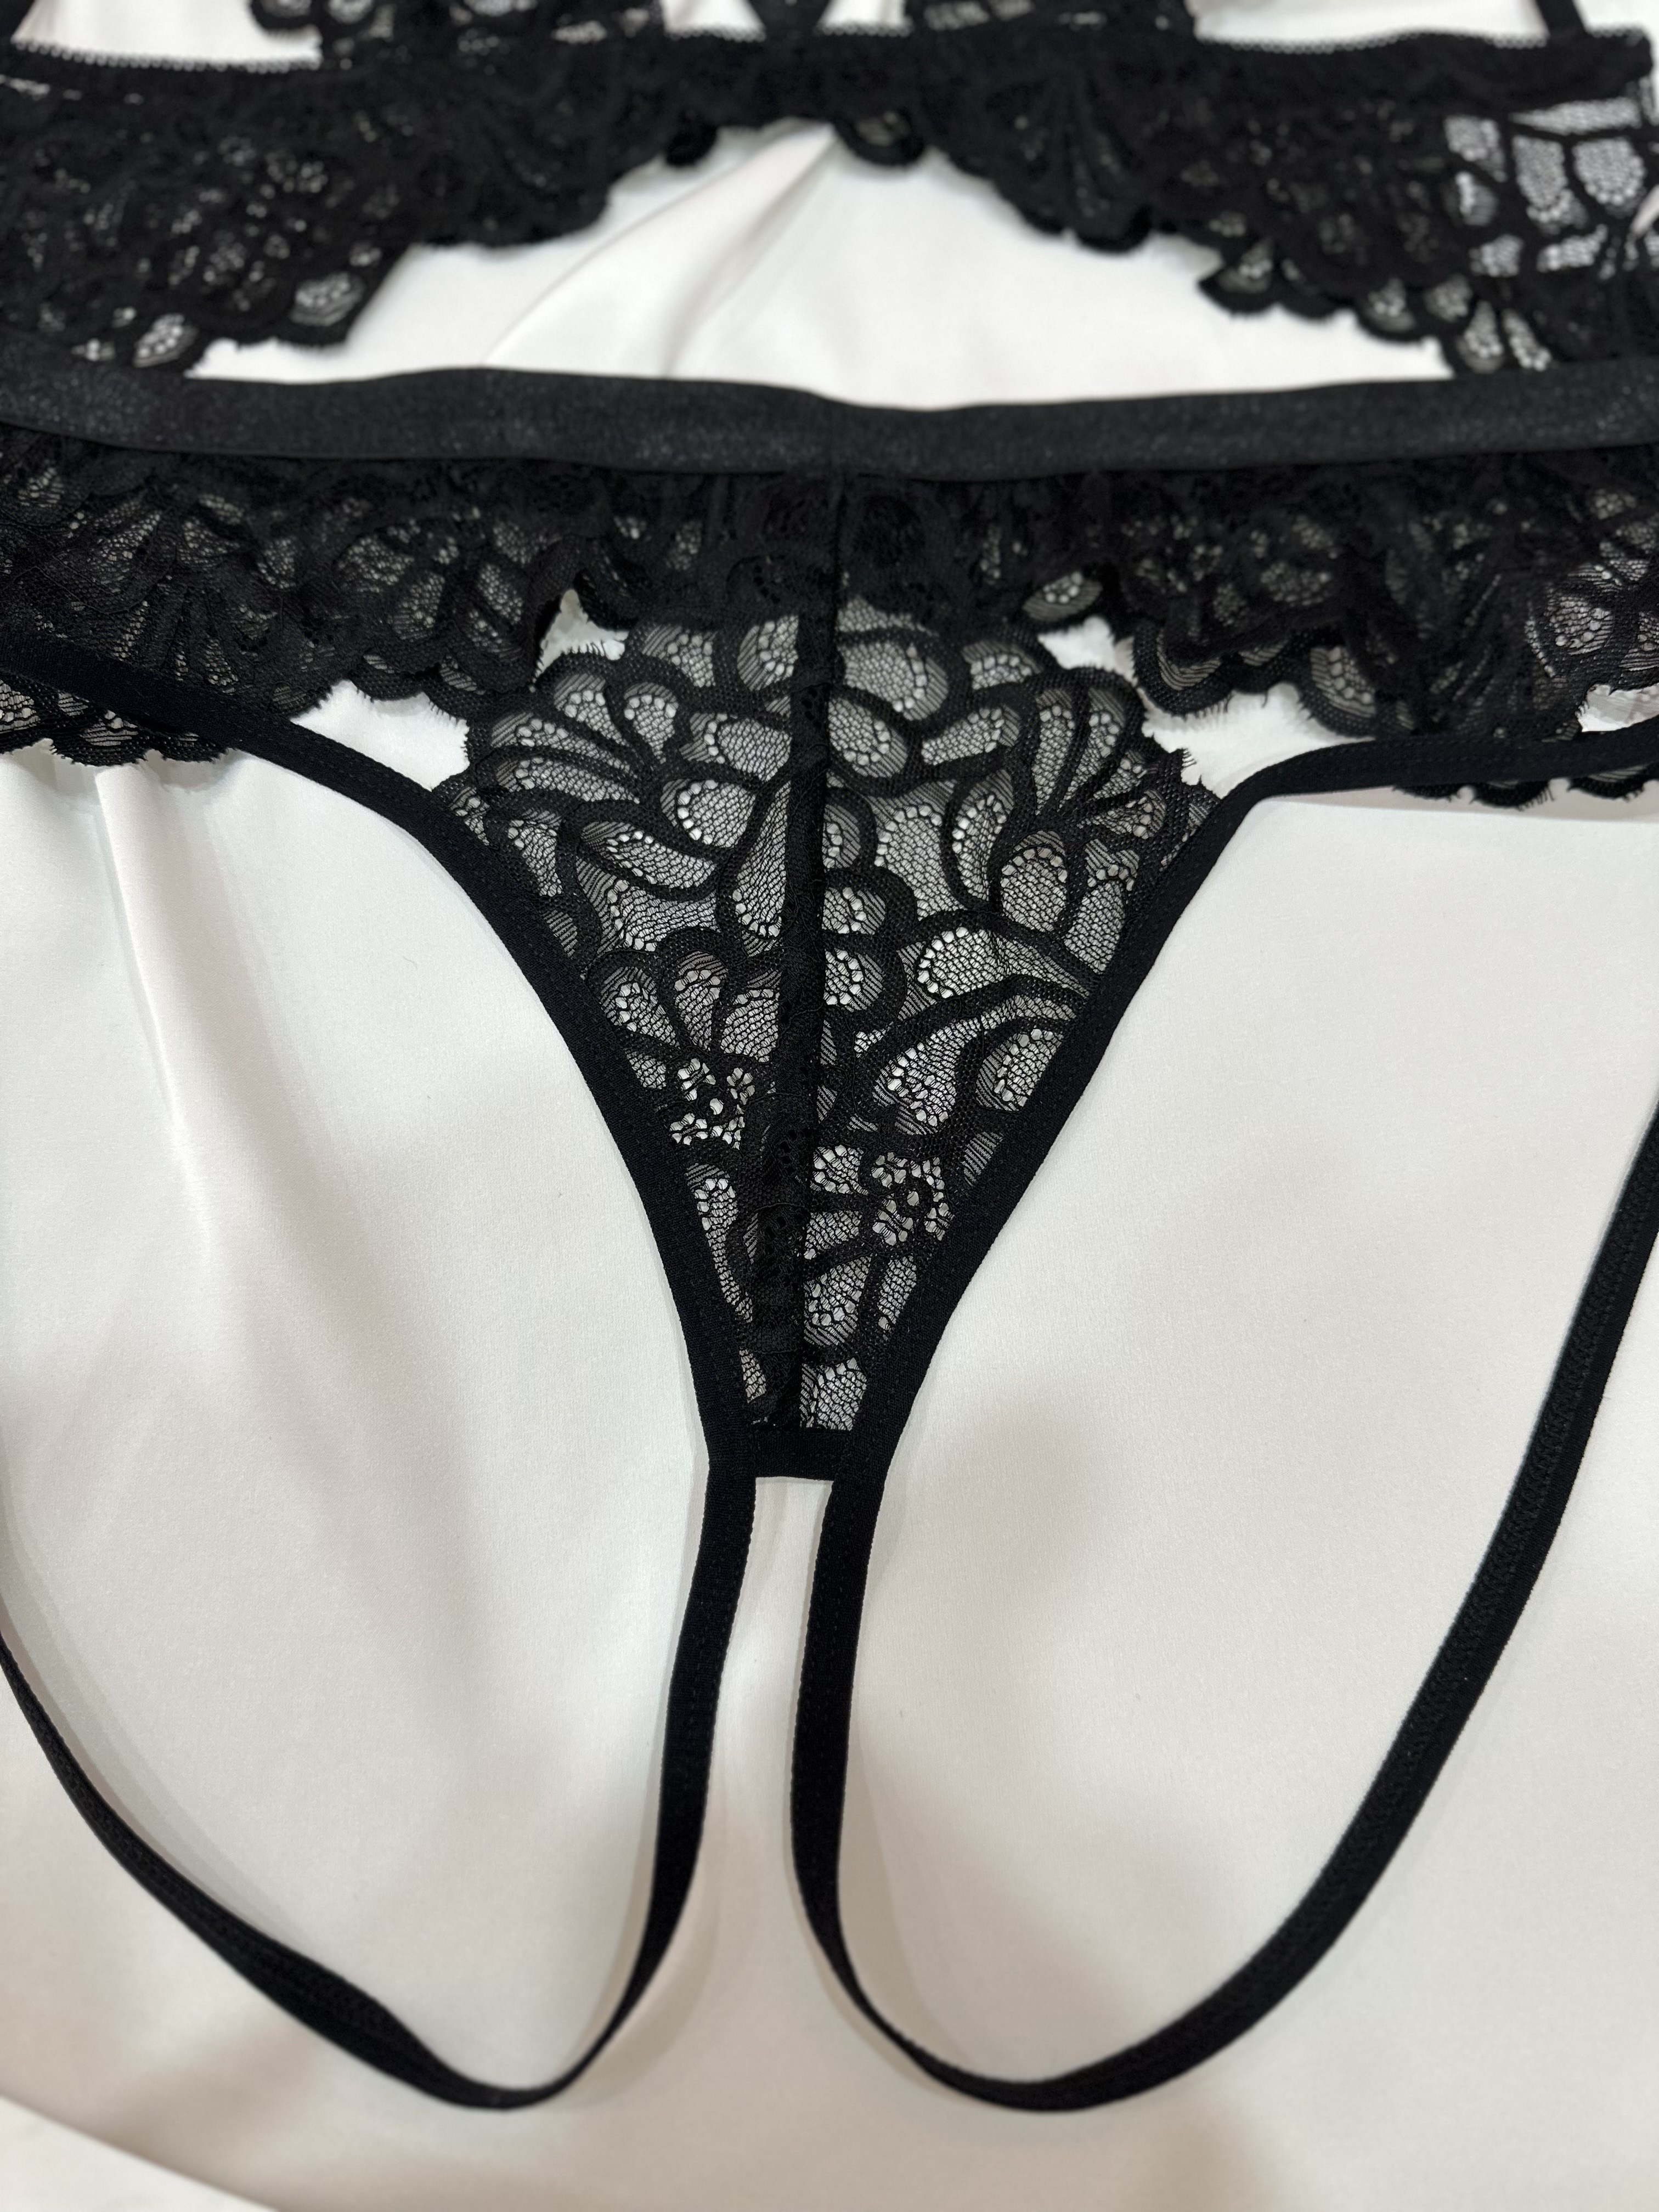  Erotic Underwear Lace Set Mature Women Lingerie with